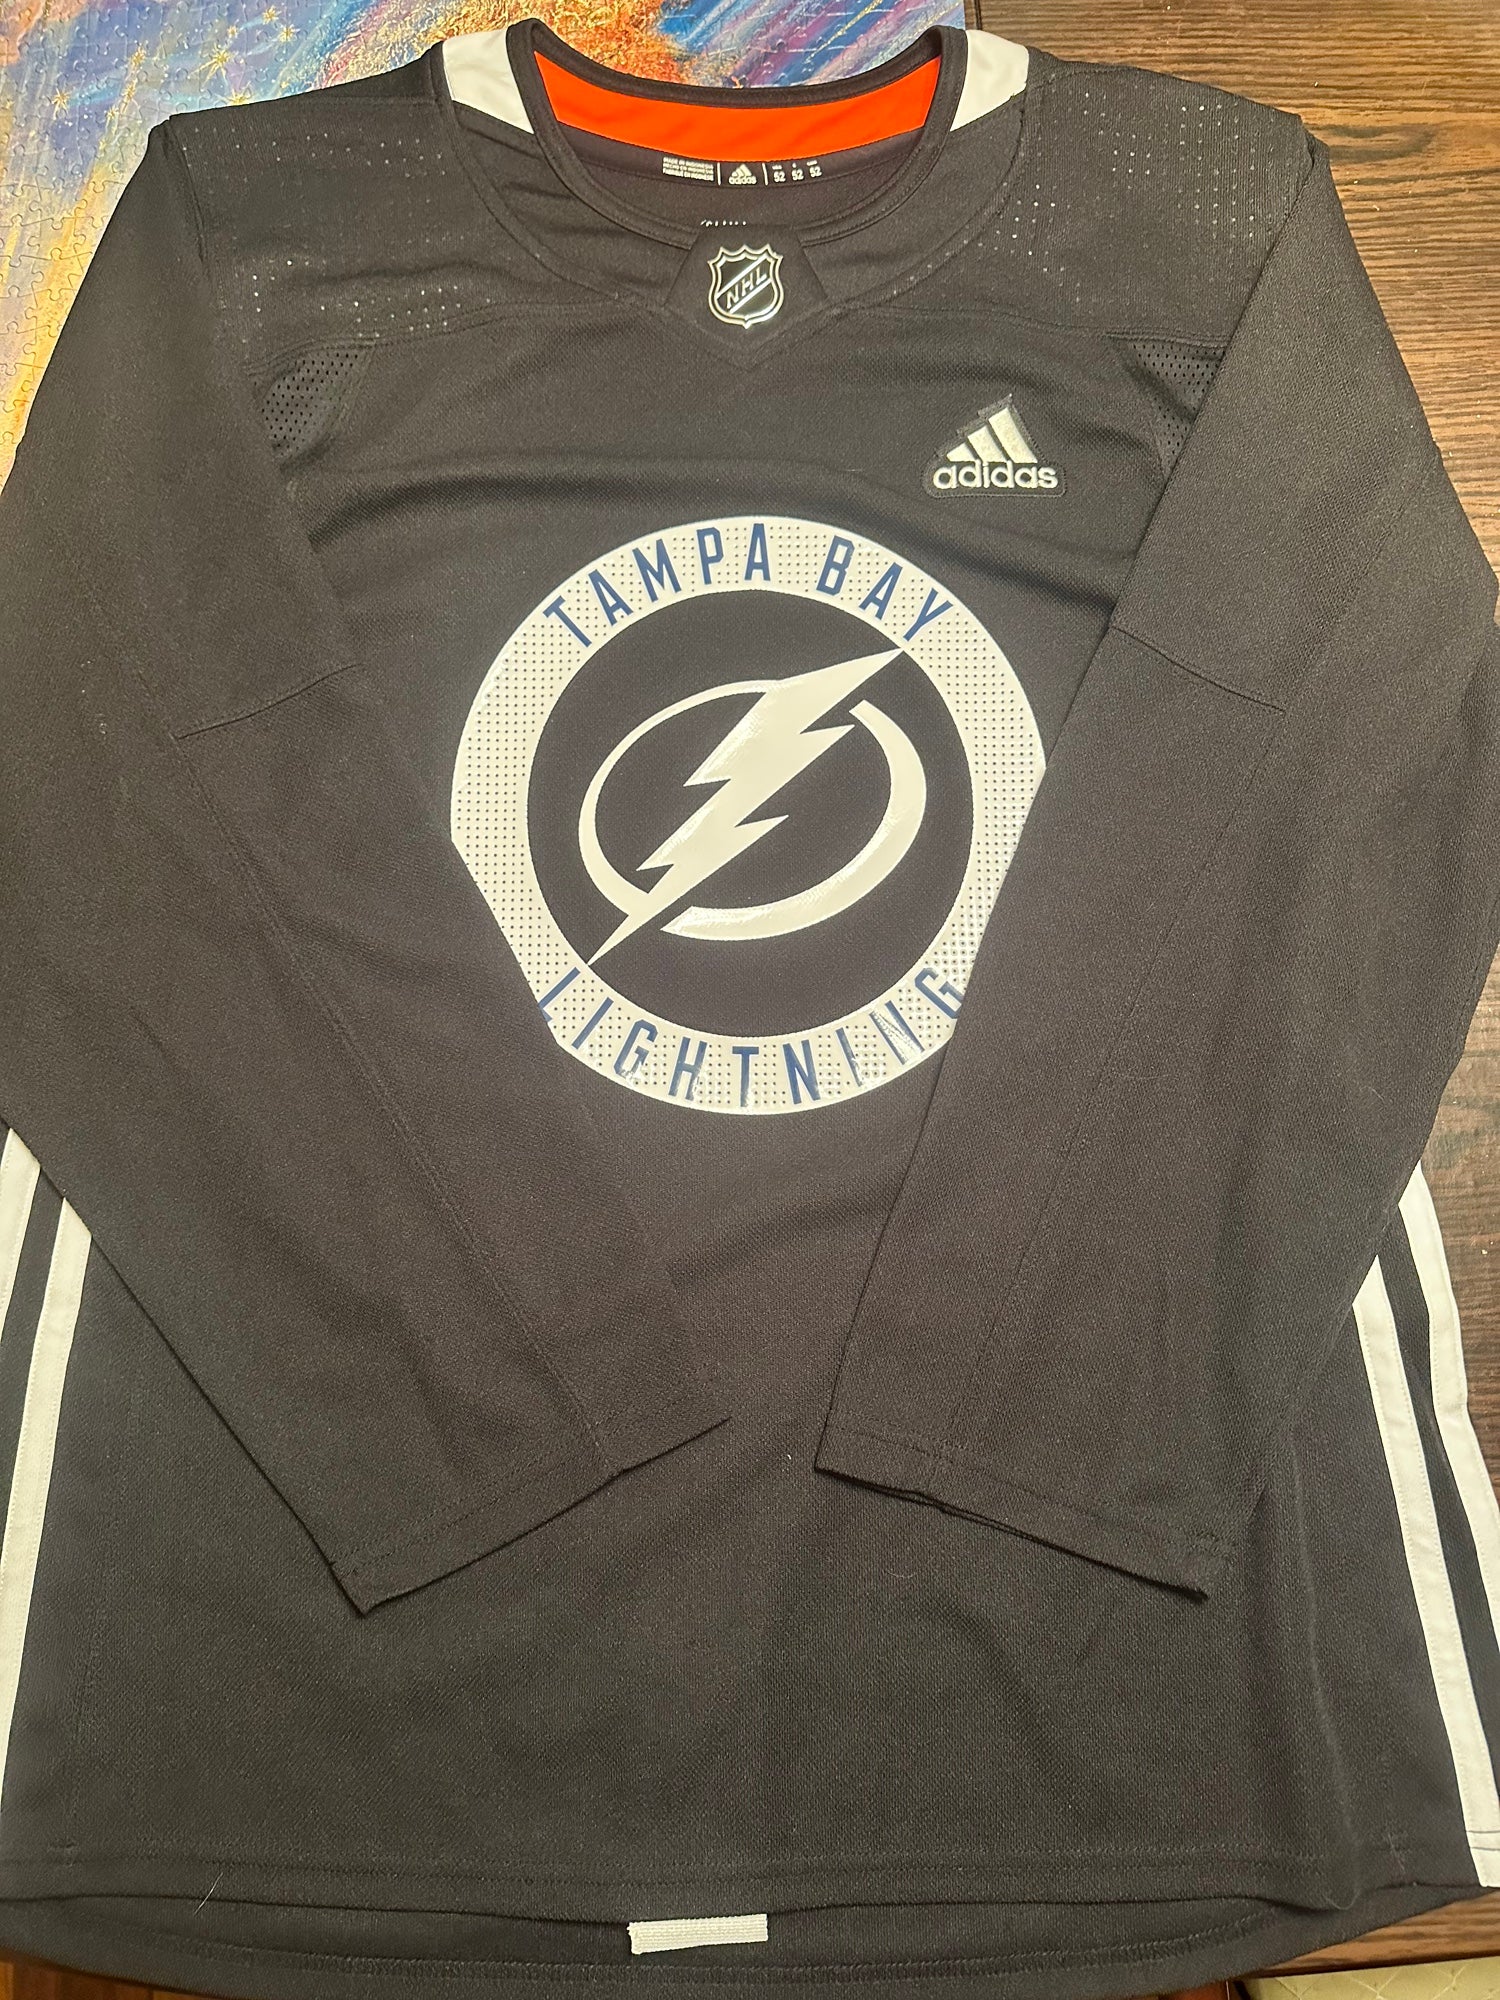 Nikita Kucherov Tampa Bay Lightning Authentic Adidas Black Jersey